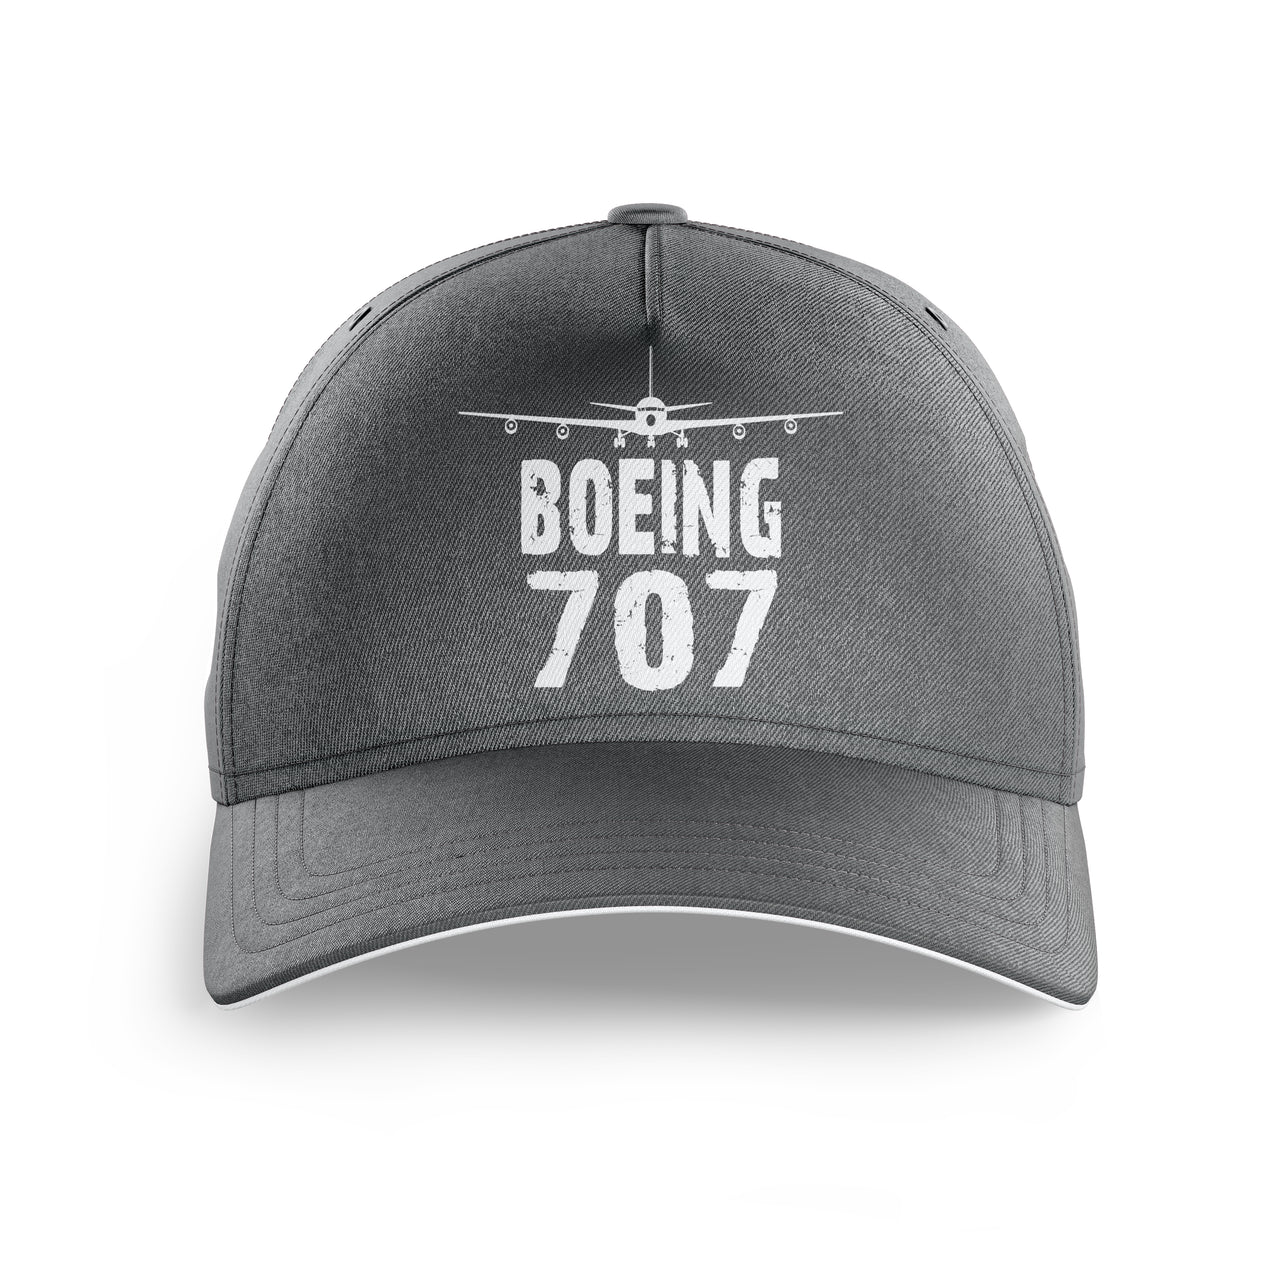 Boeing 707 & Plane Printed Hats